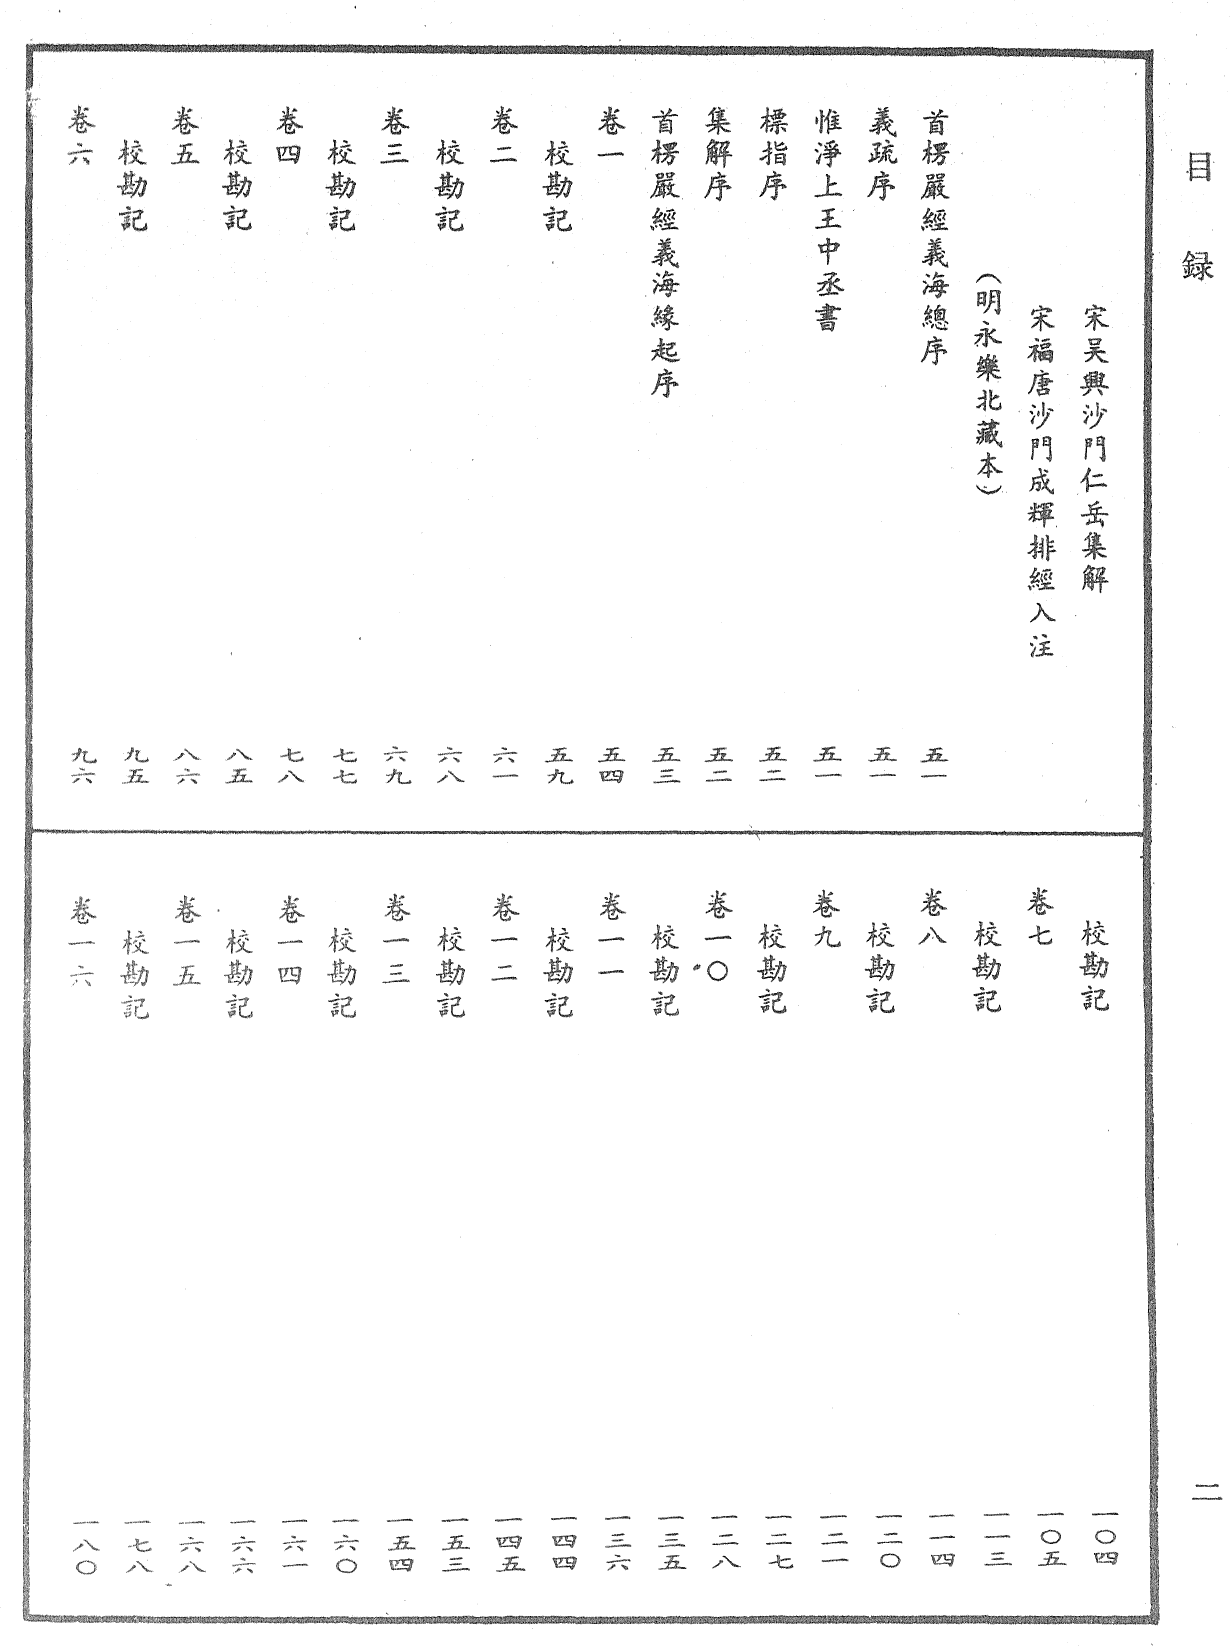 File:《中華大藏經》 第98冊 目録 (2).png